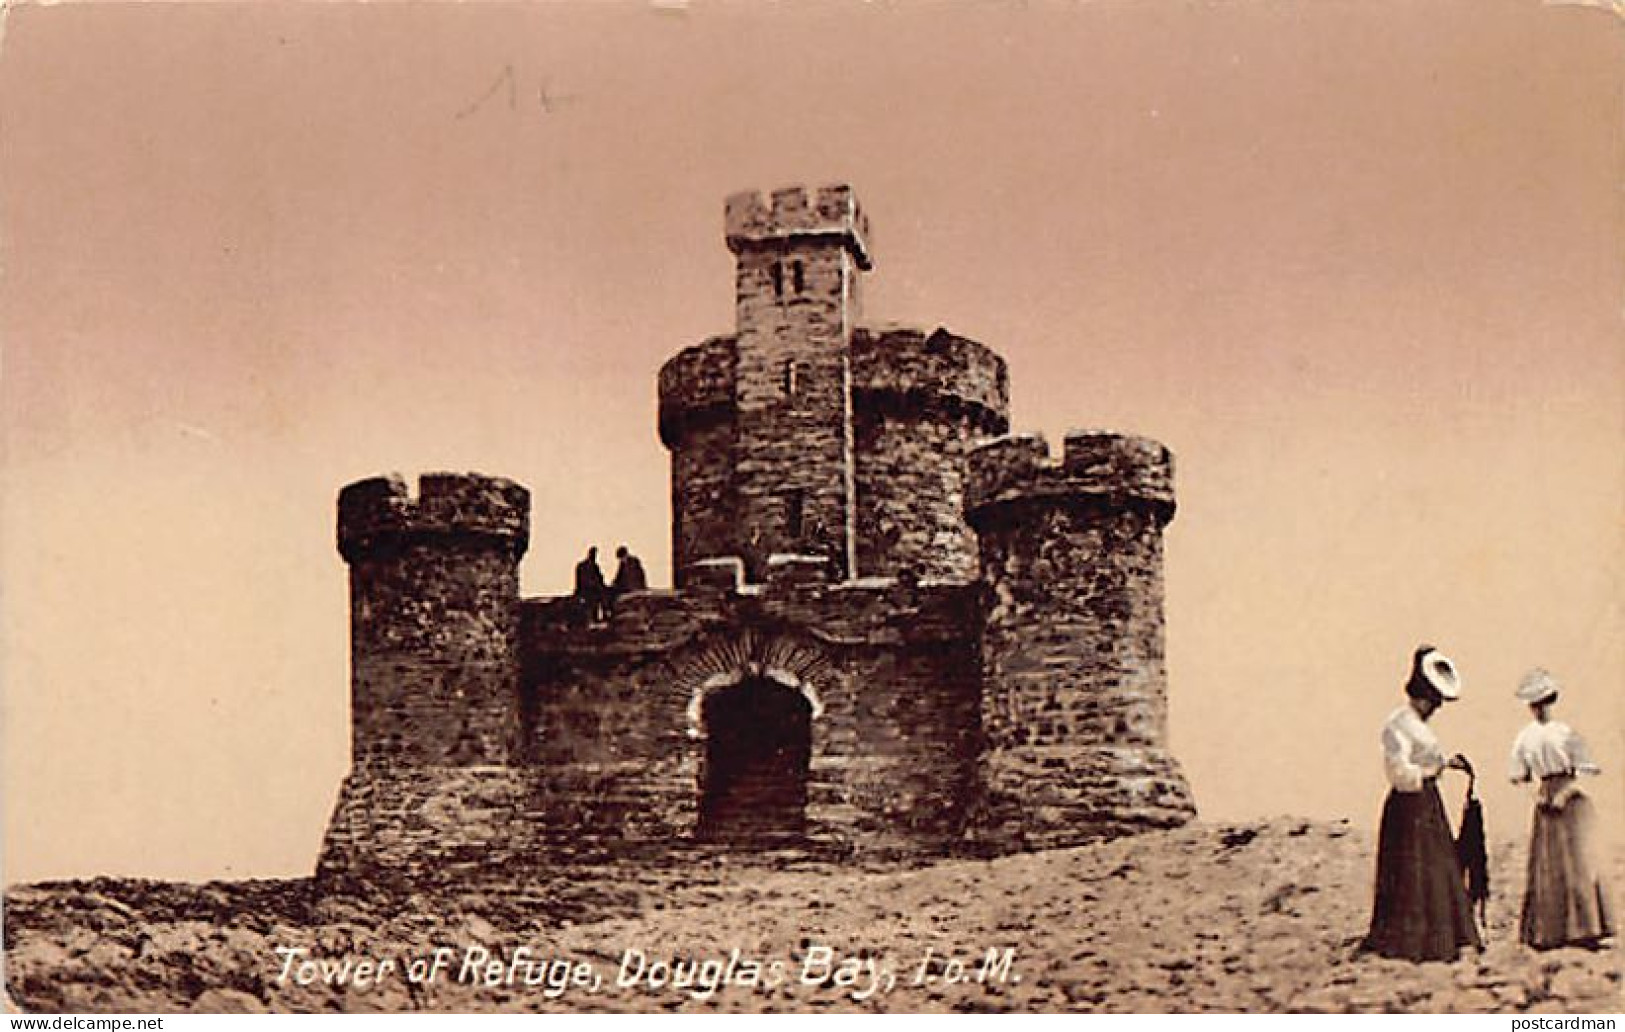 Isle Of Man - DOUGLAS - Tower Of Refuge - Publ. Hough  - Isla De Man